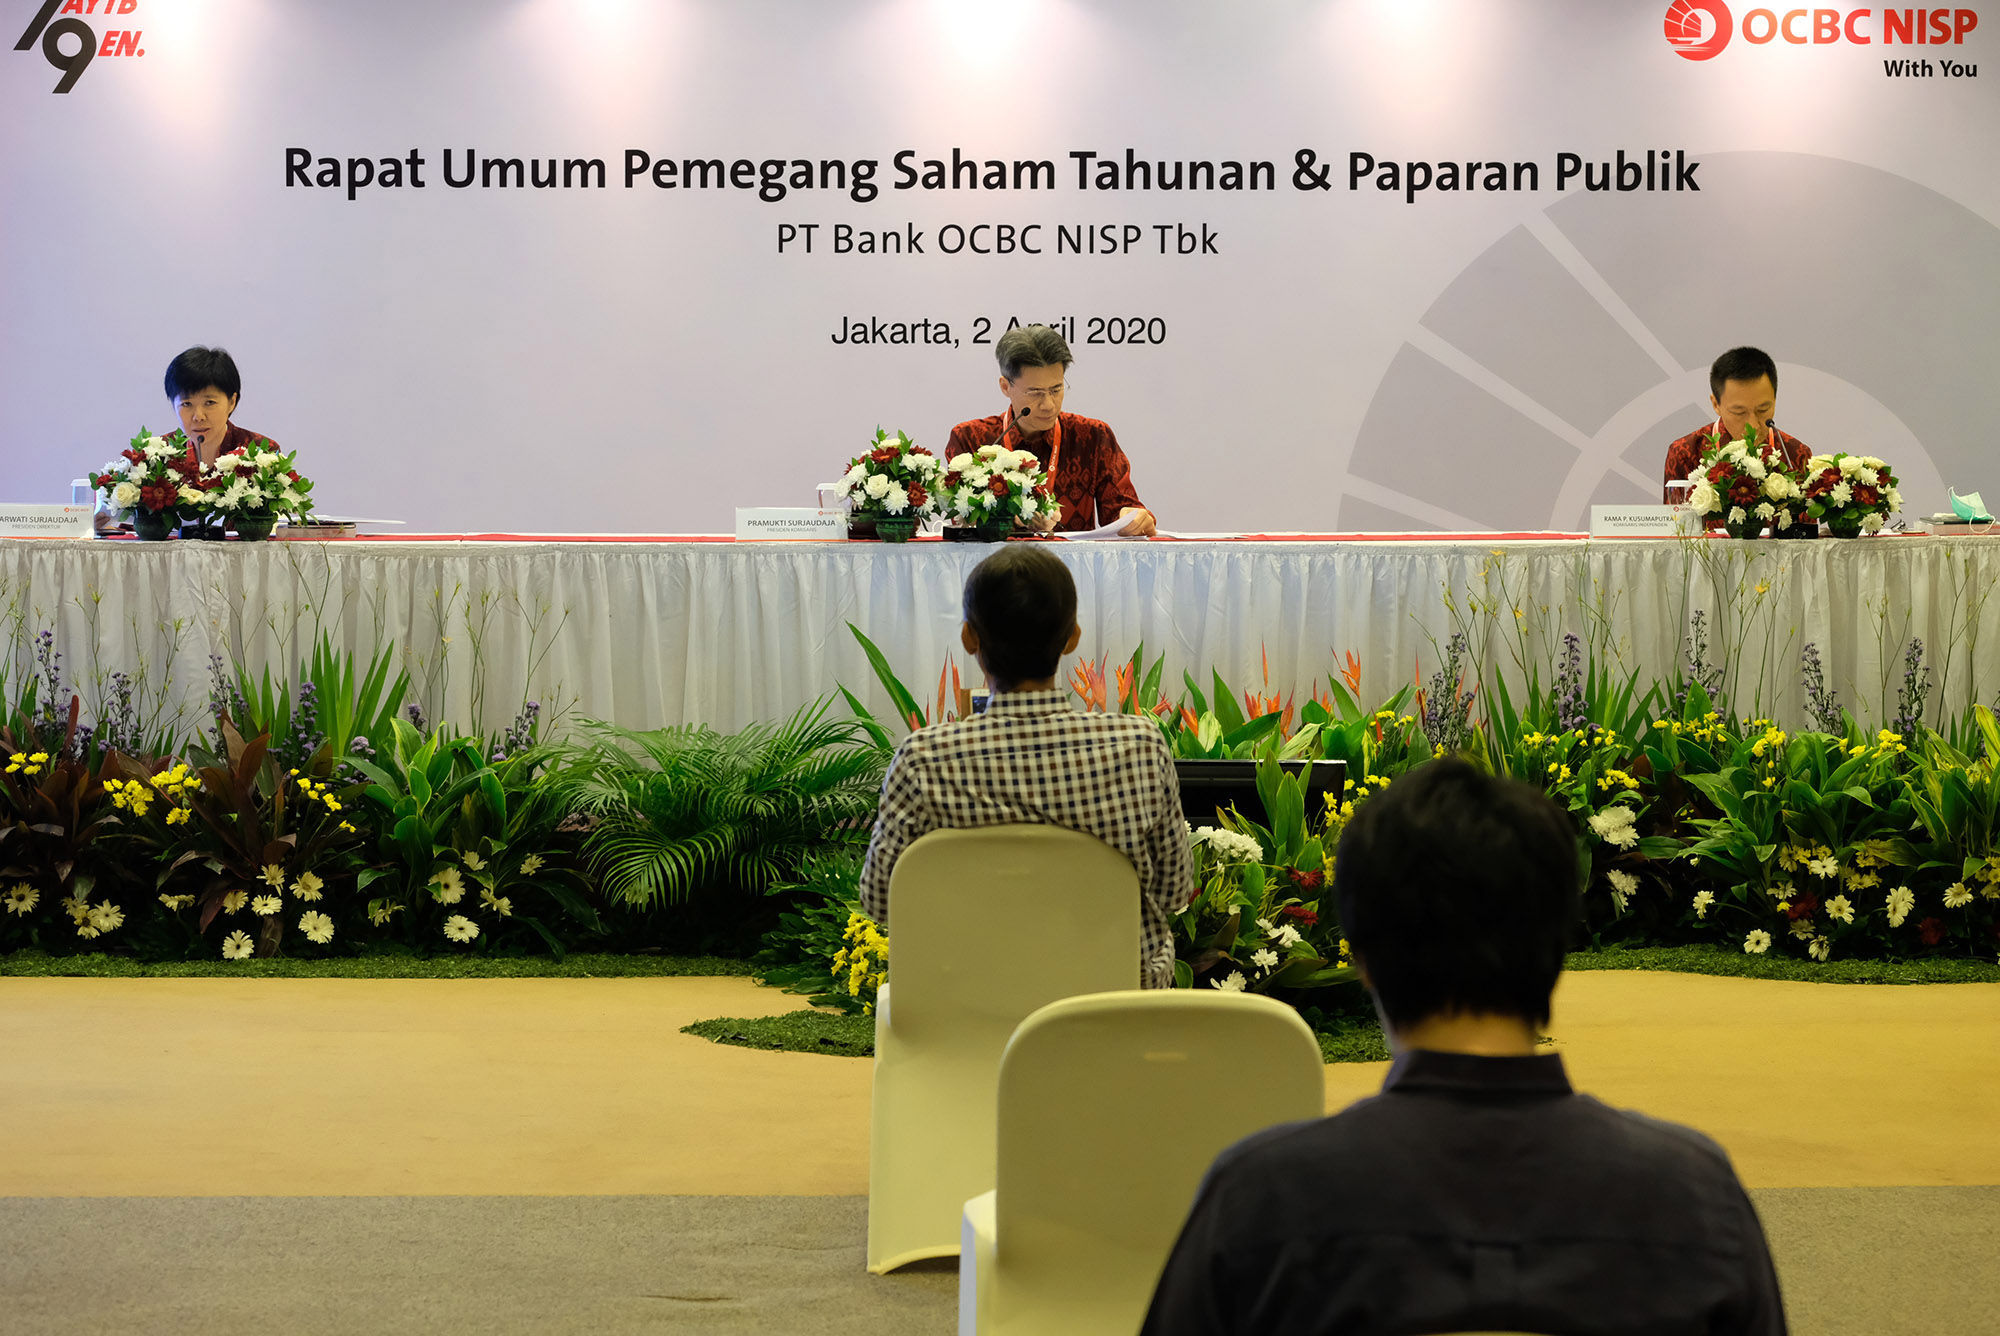 <p>Presiden Direktur Bank OCBC NISP Parwati Surjaudaja (kiri) didampingi Presiden Komisaris Bank OCBC NISP Pramukti Surjaudaja (tengah) dan Komisaris Independen Bank OCBC NISP Rama P. Kusumaputra (kanan) menyampaikan agenda Rapat Umum Pemegang Saham Tahunan Bank OCBC NISP 2020<br />
di Jakarta, Kamis (2/4).</p>
